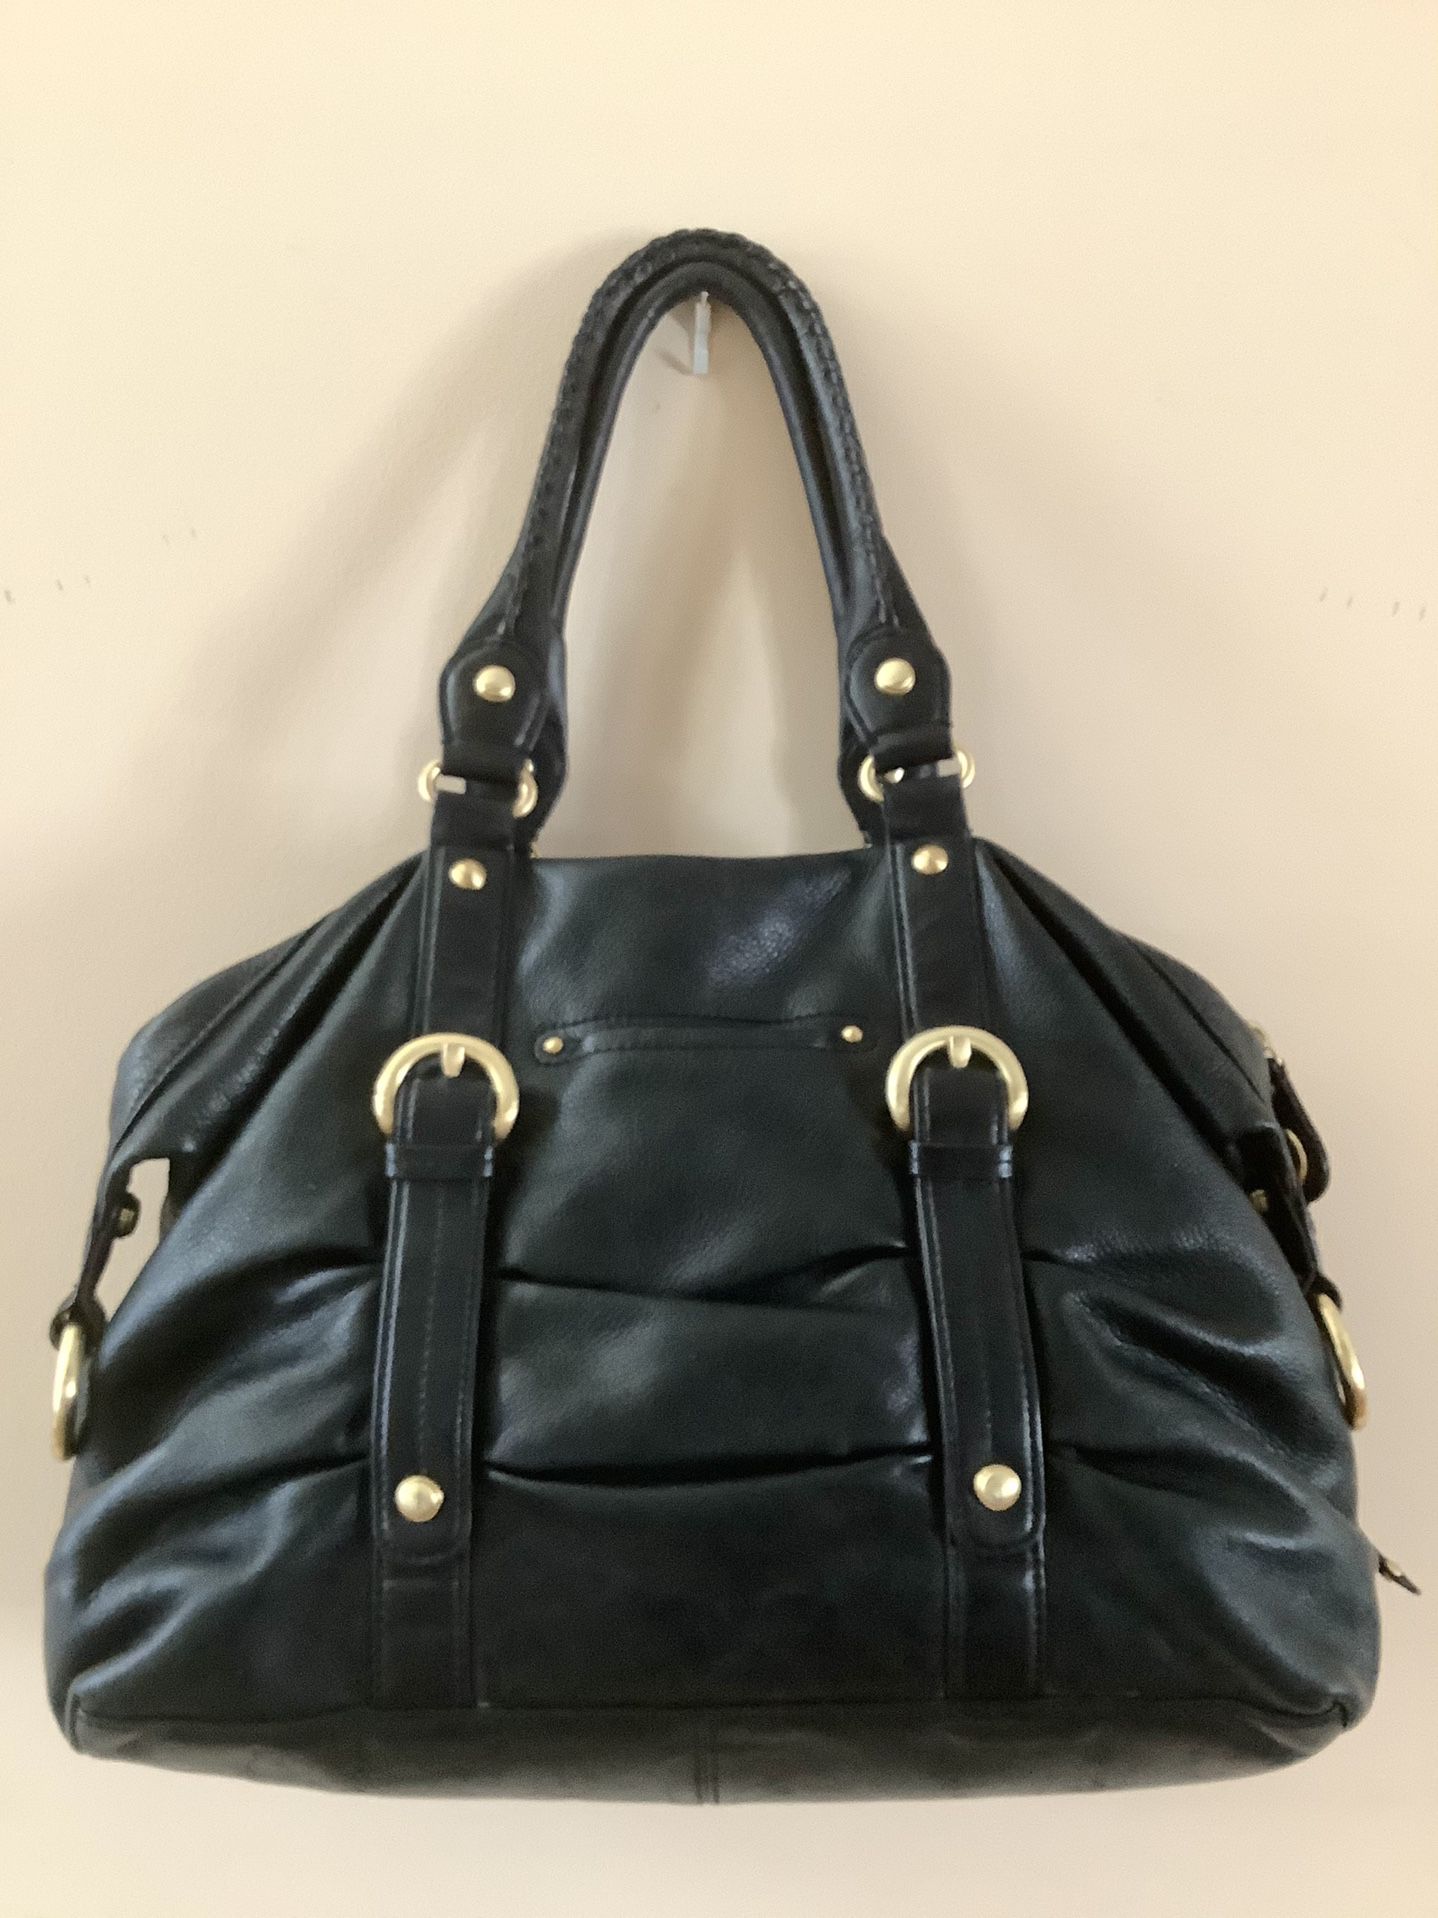 B. Makowsky Tote Hobo Large Black Pebbled Genuine Leather Handbag